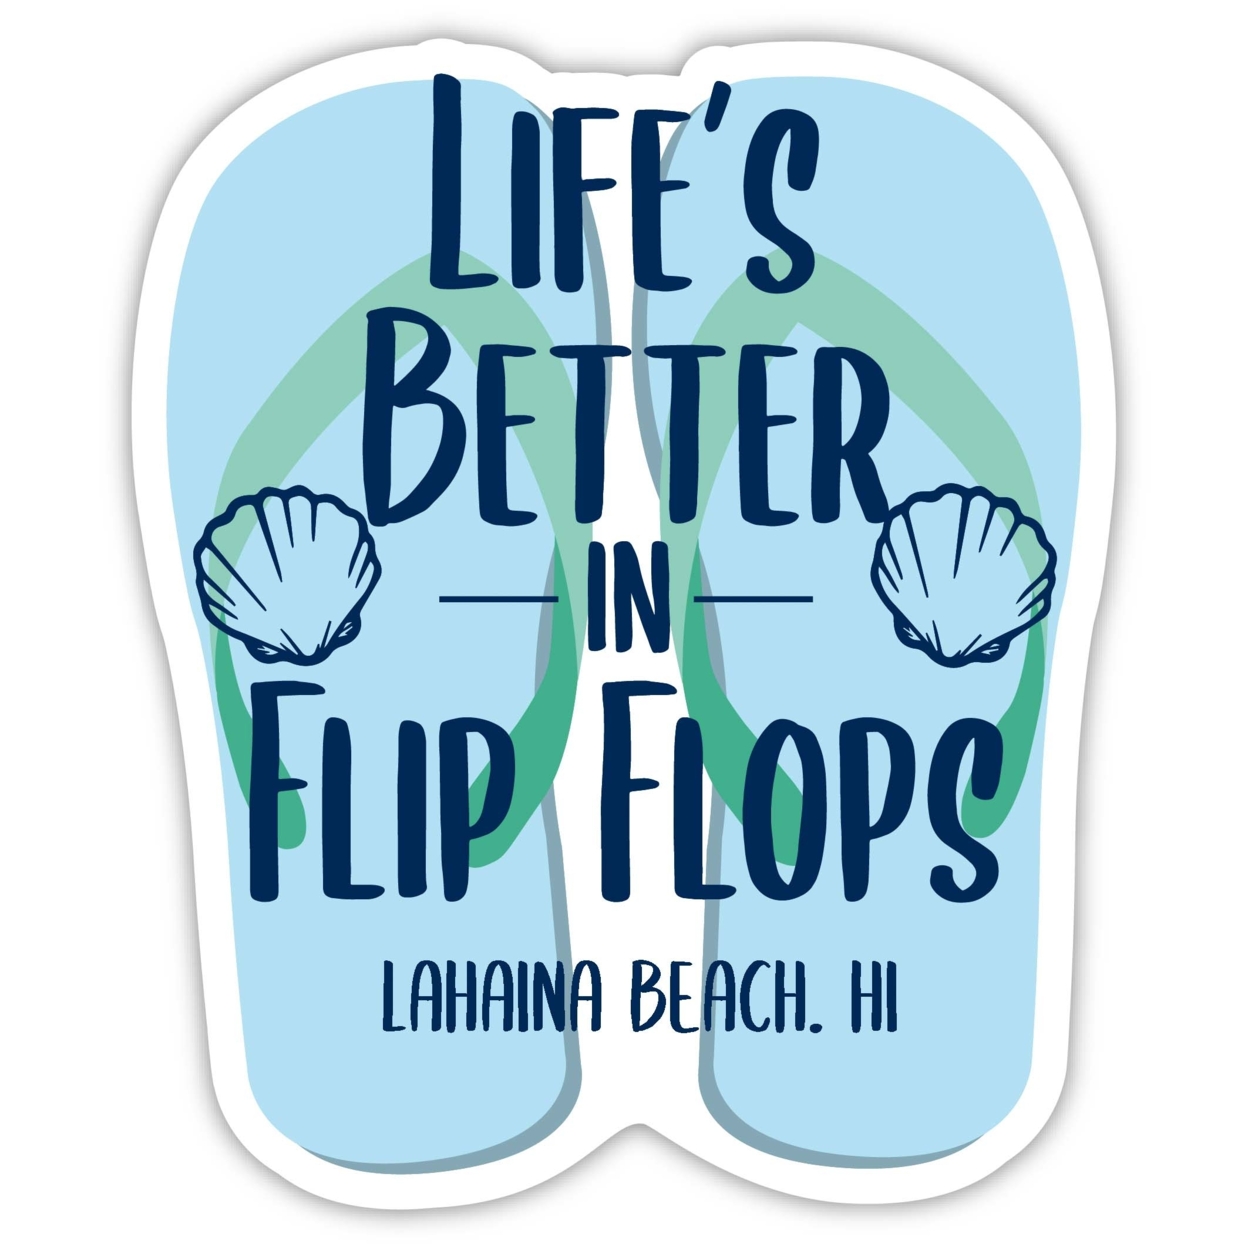 Lahaina Beach Hawaii Souvenir 4 Inch Vinyl Decal Sticker Flip Flop Design